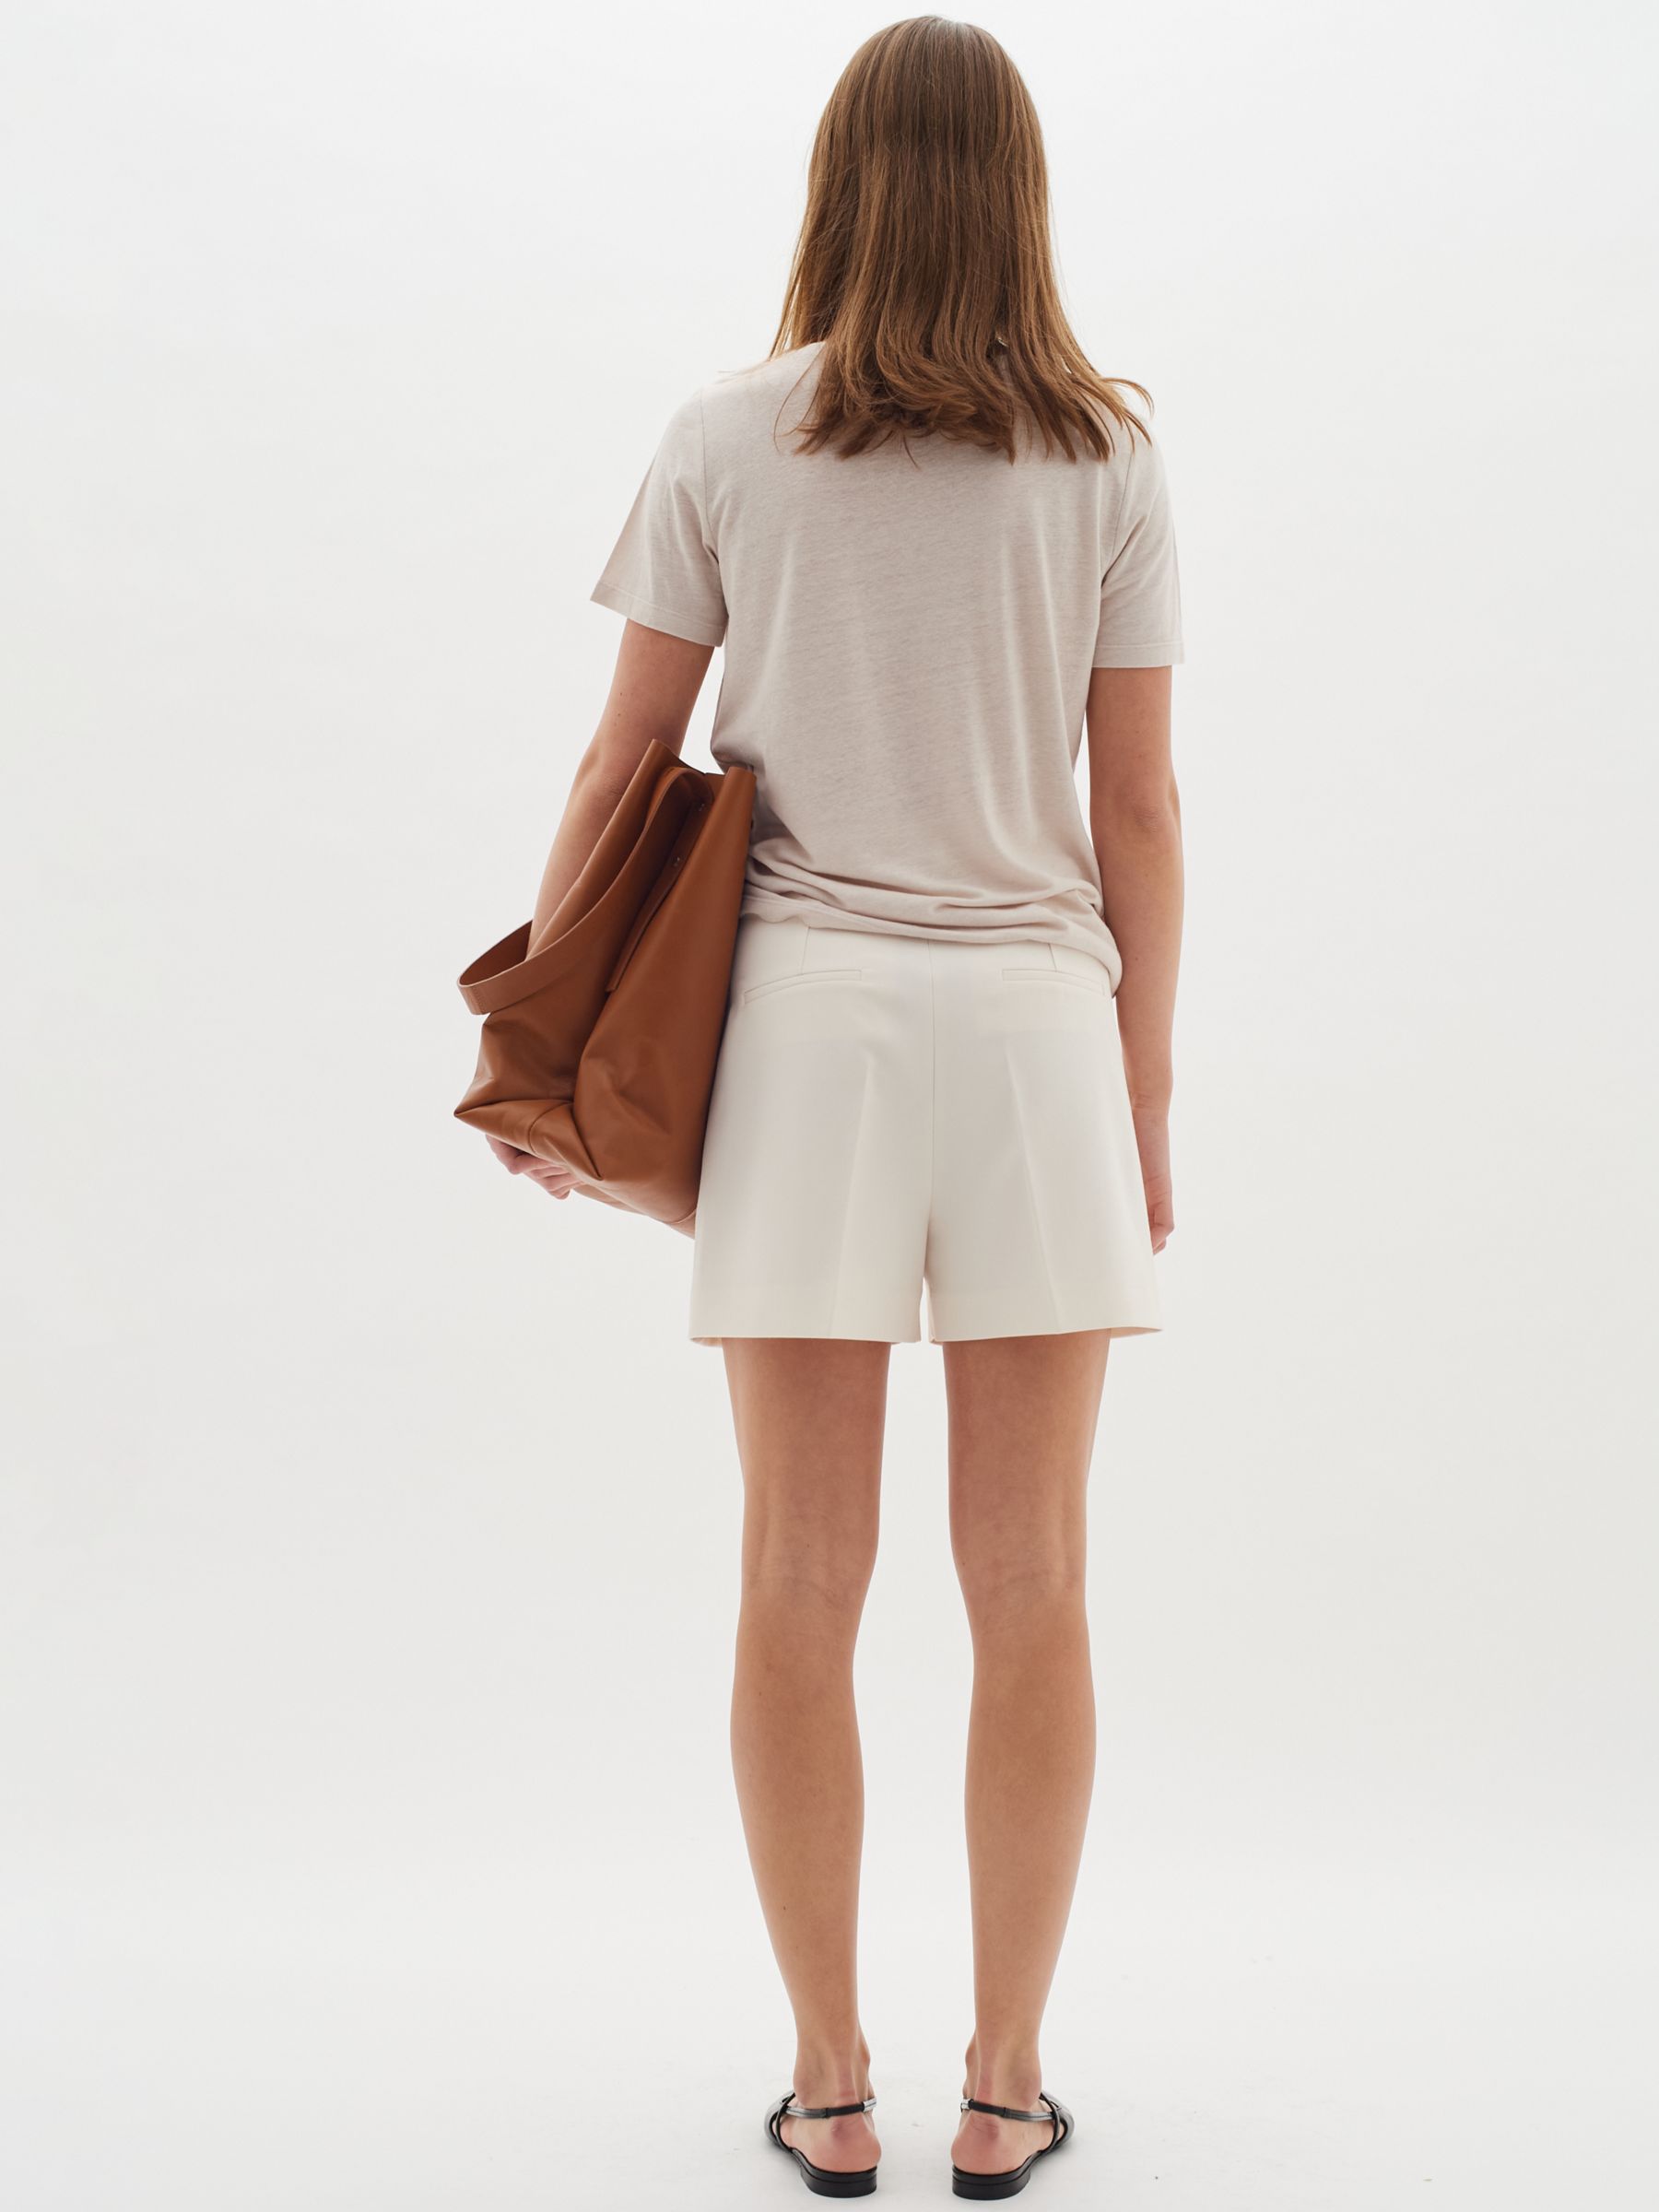 Buy InWear Elisabeth Linen Blend Short Sleeve T-shirt, Haze Online at johnlewis.com